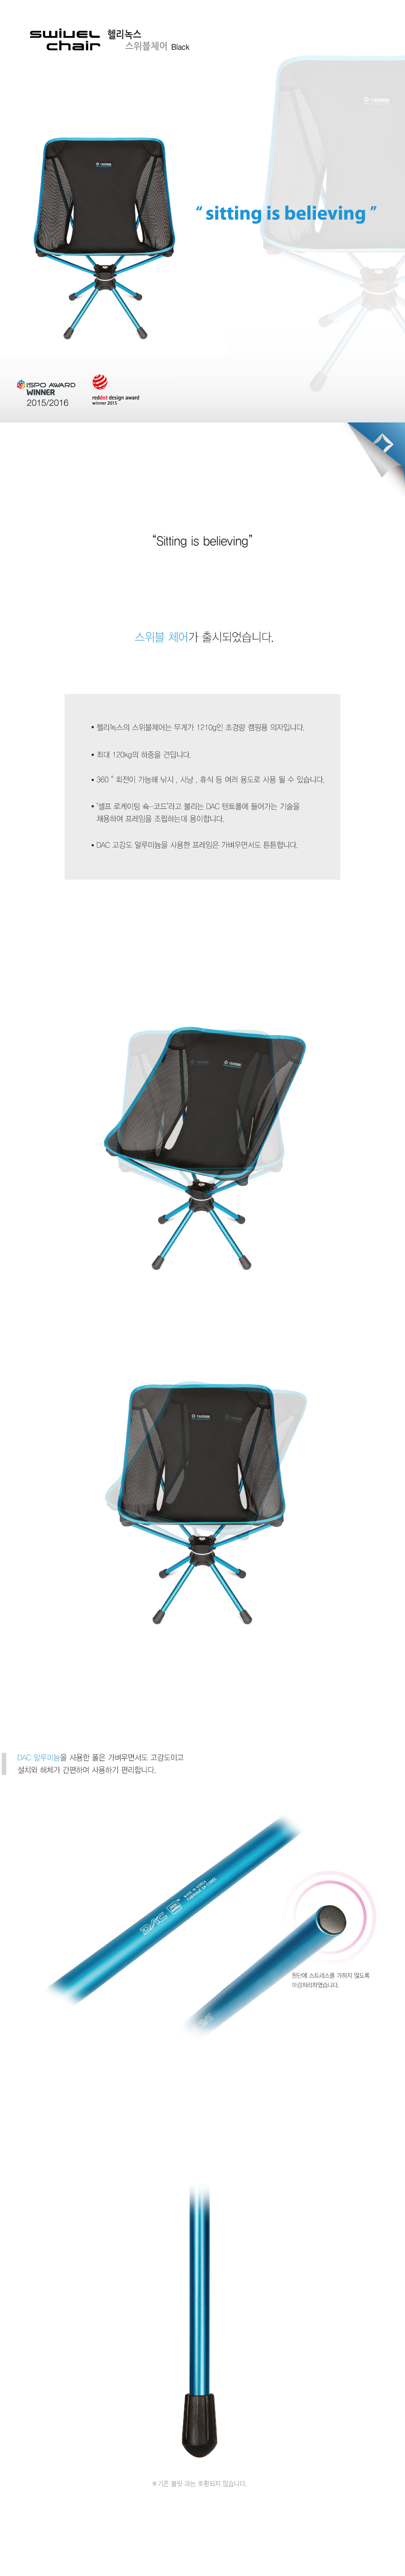 20150324-Helinox_swivel-chair-상세페이지-1_수정.jpg